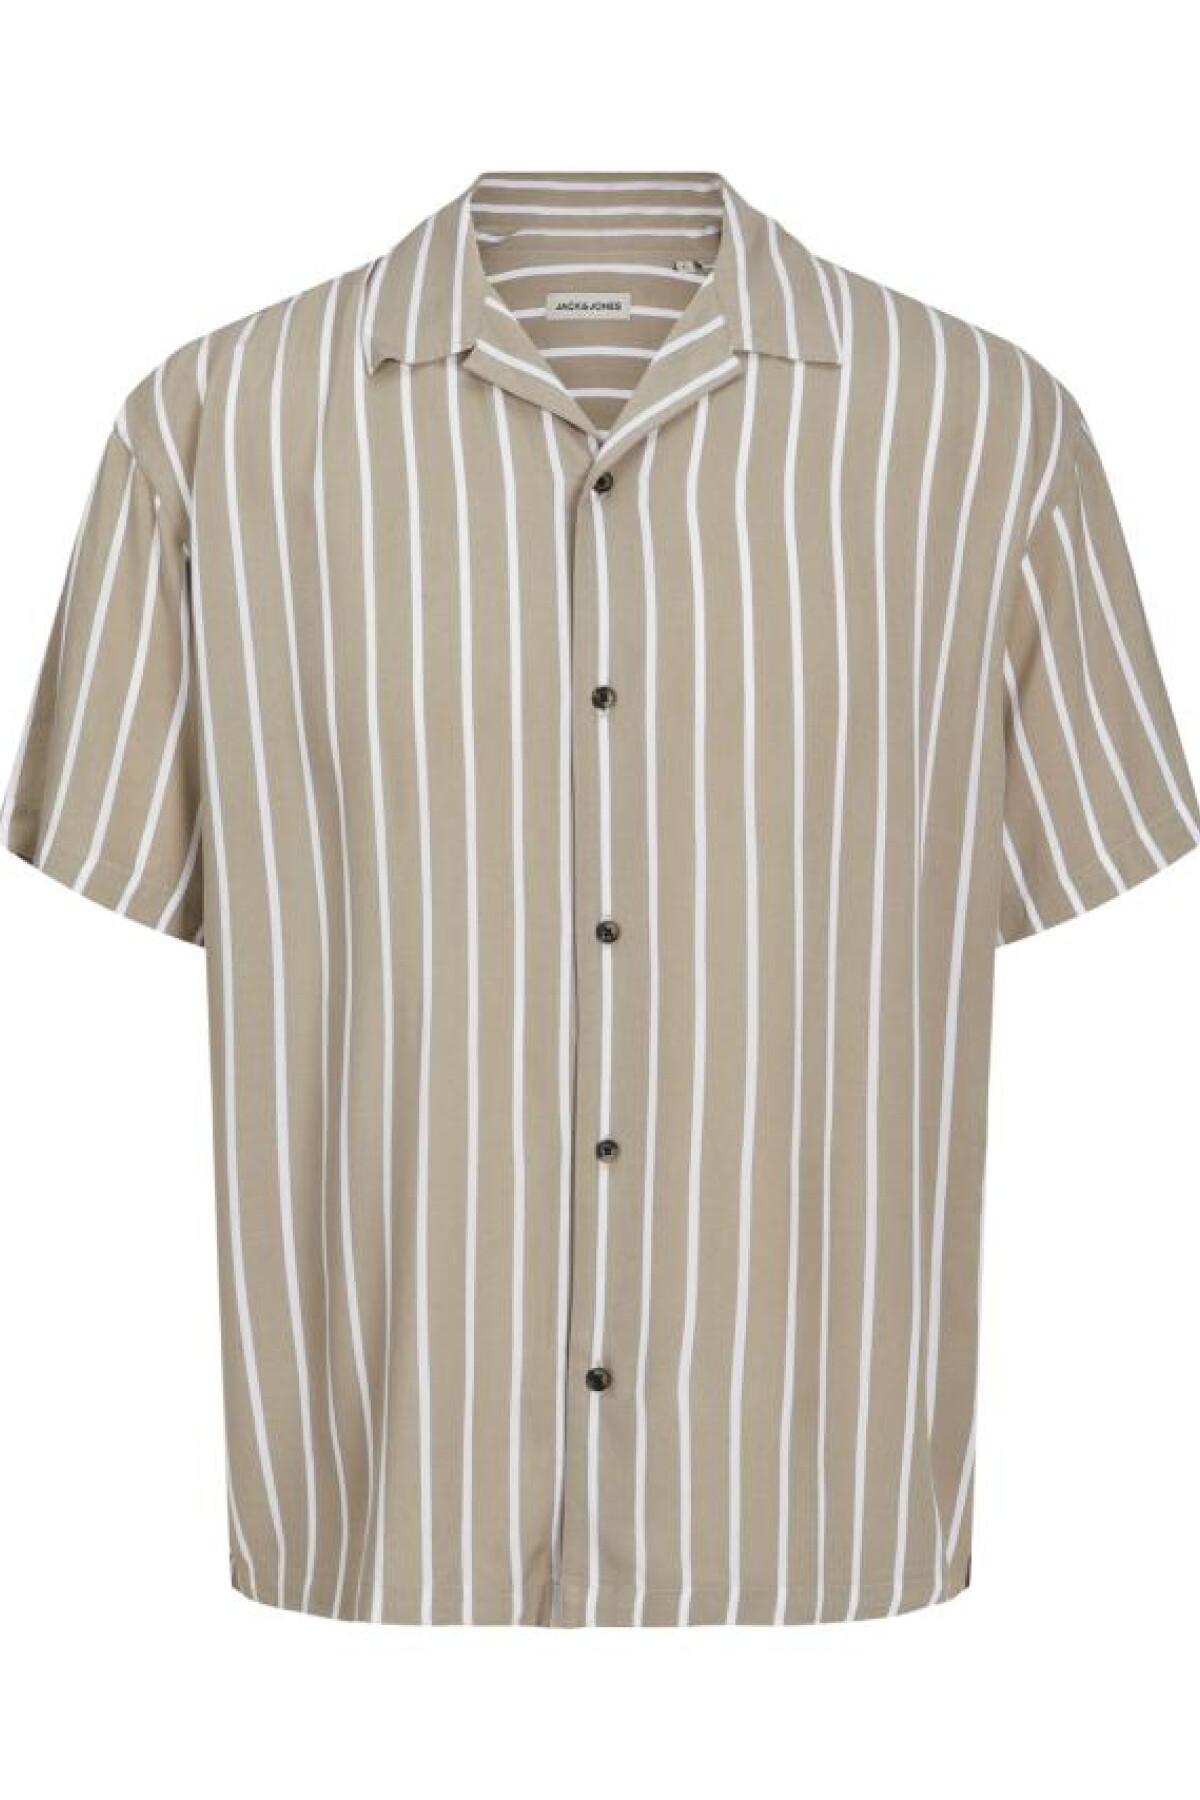 Camisa Jeff Resort Stripes Crockery